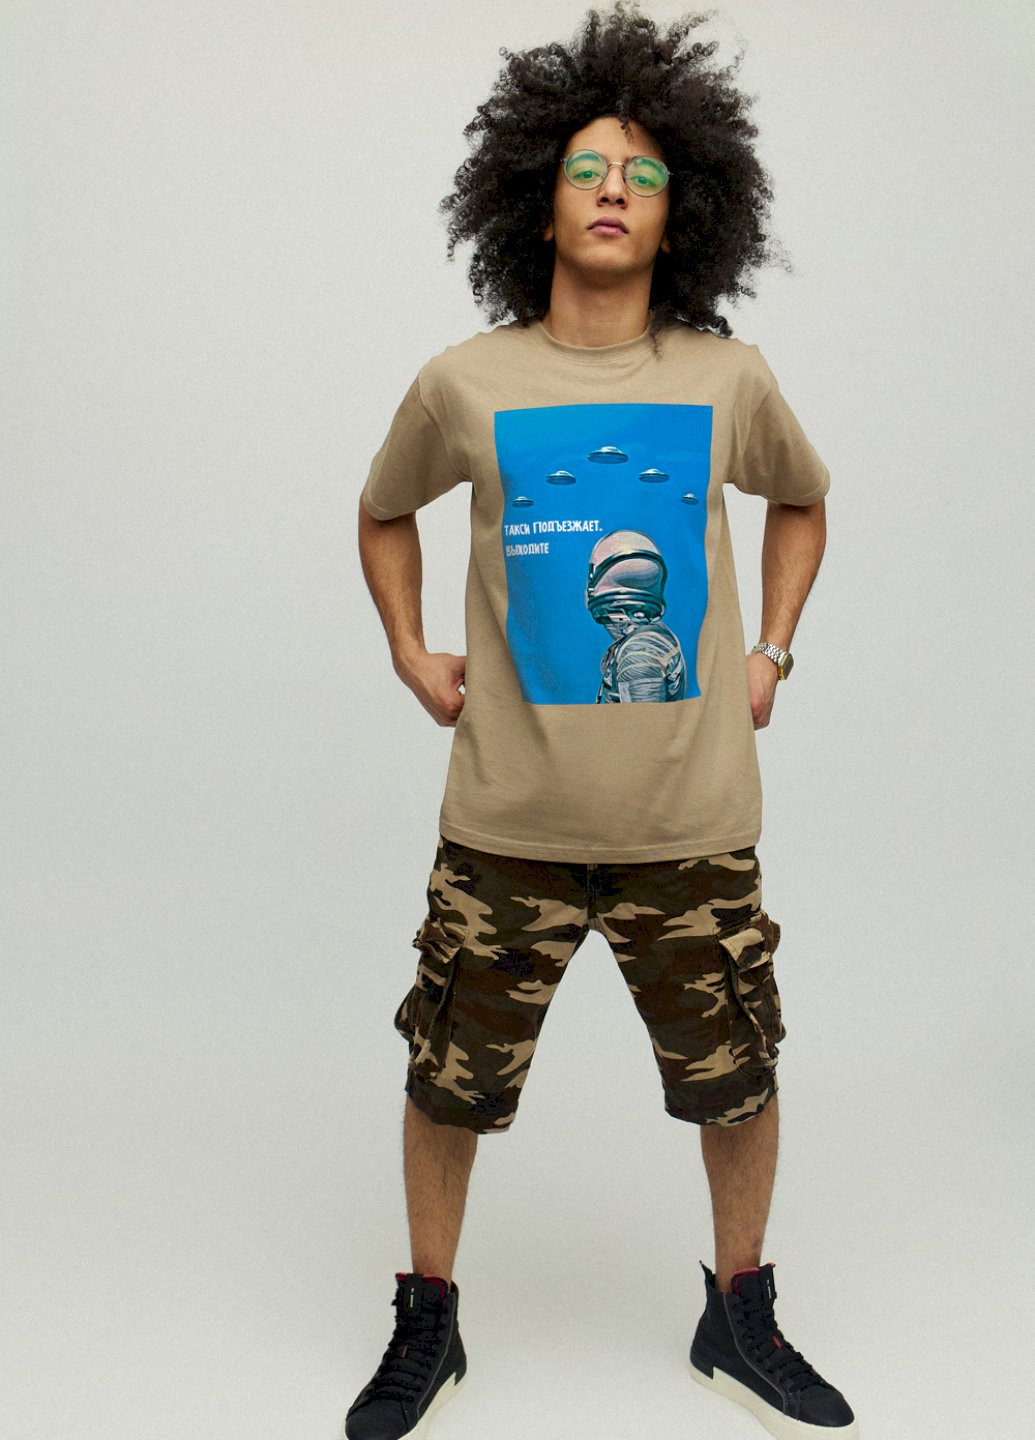 Хаки (оливковая) футболка basic YAPPI